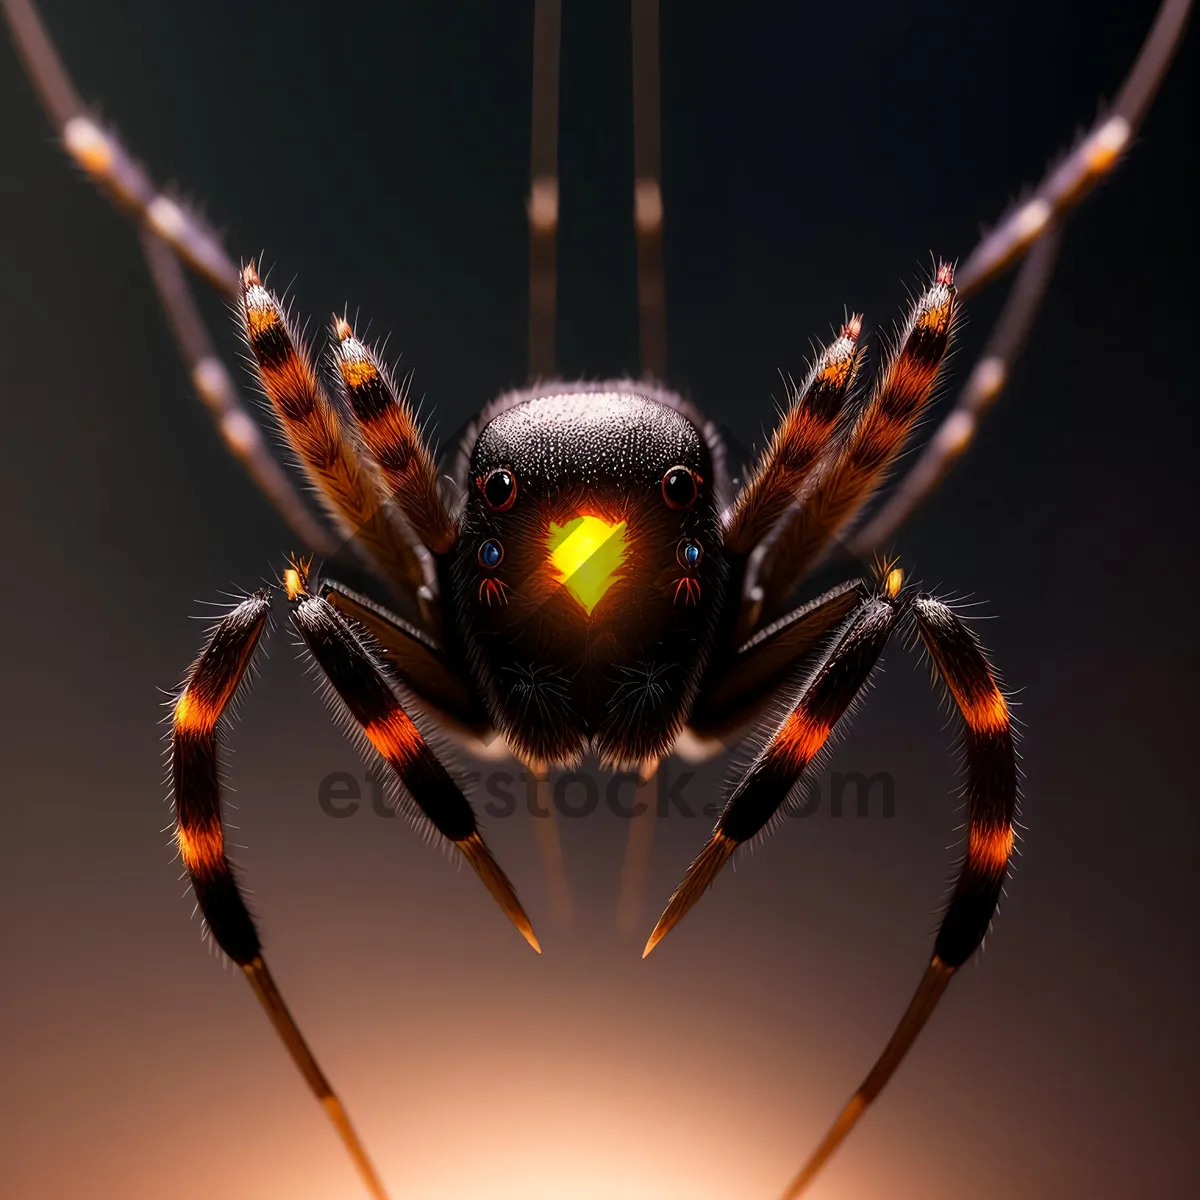 Picture of Black Widow Spider Close-Up - Exquisite Arachnid Encounter